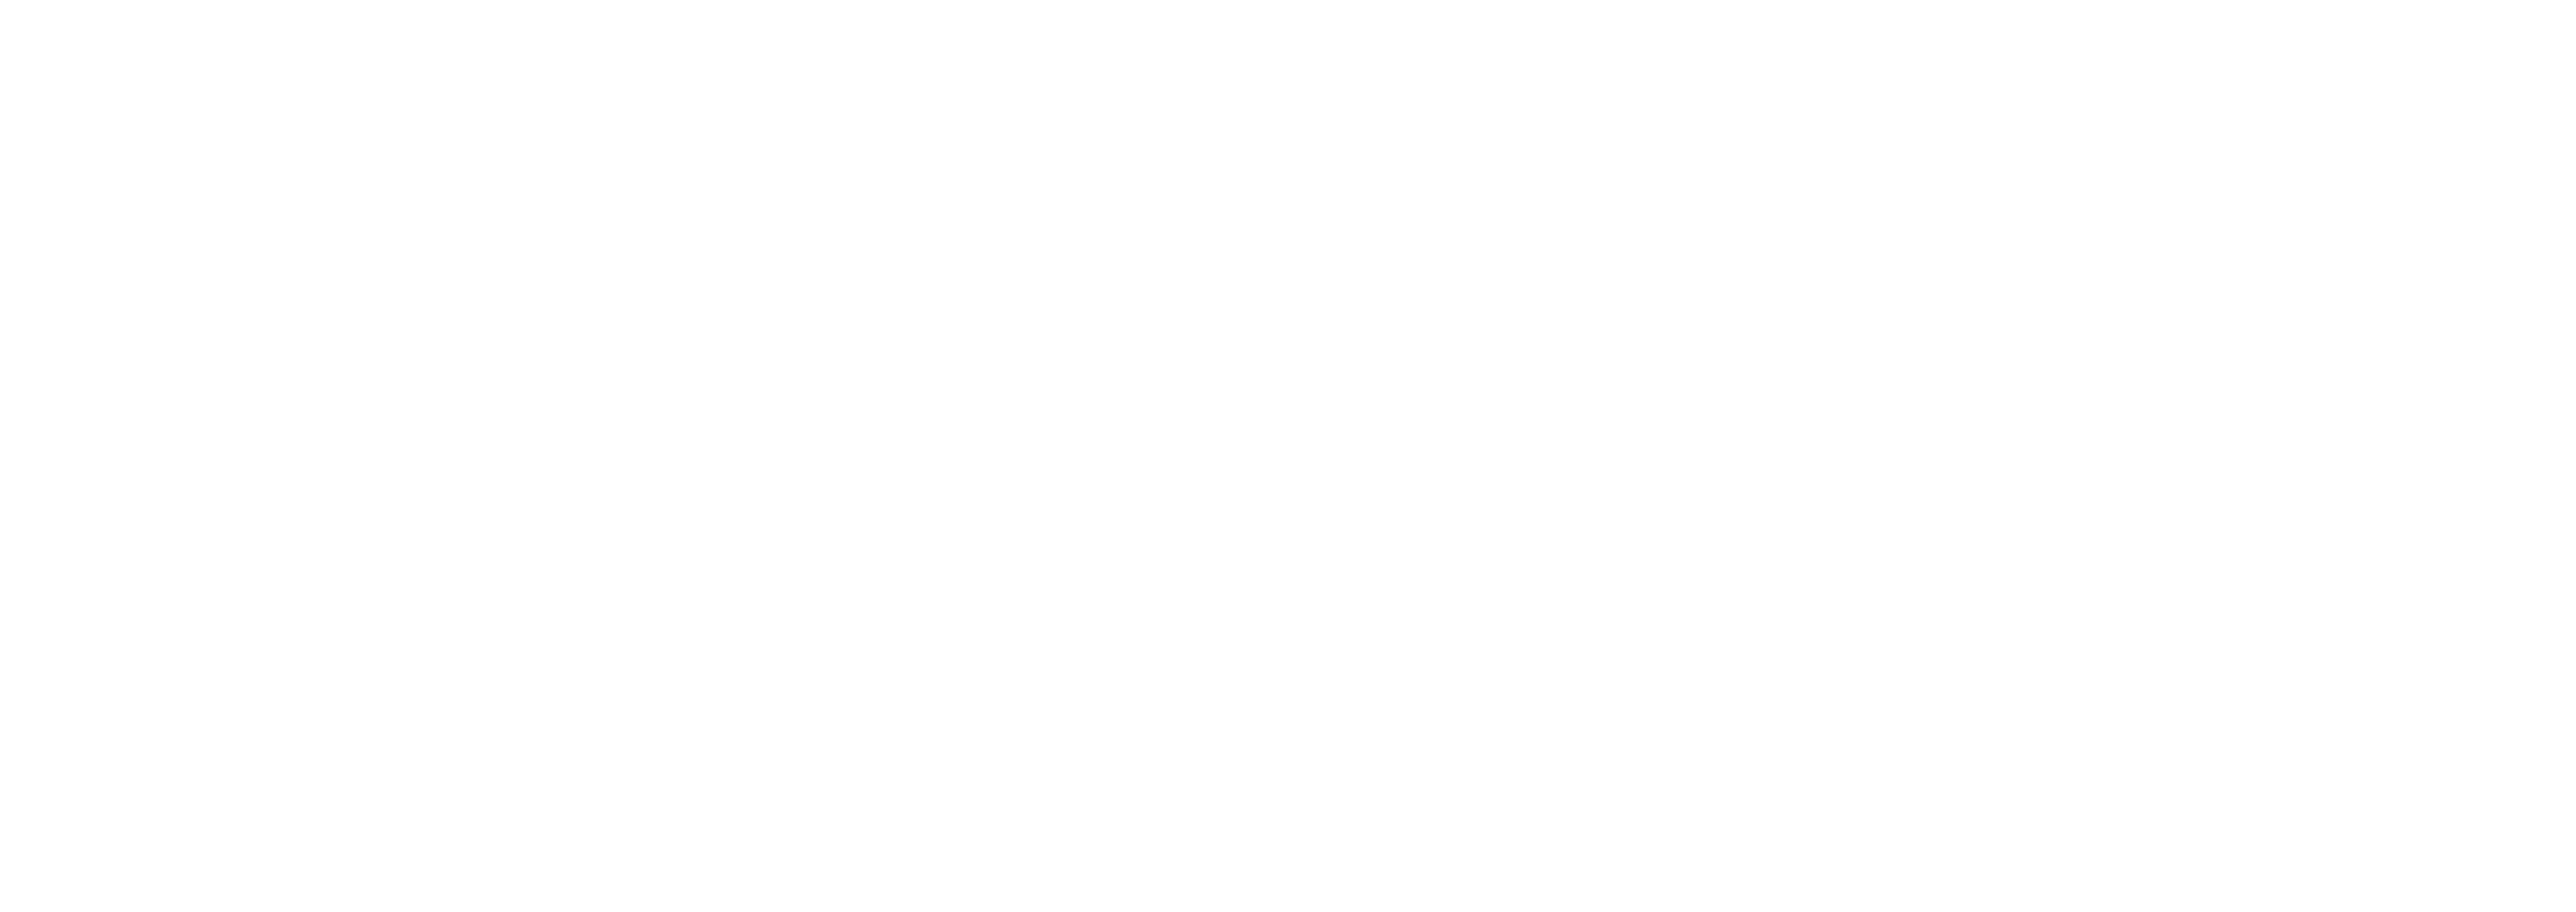 FF_logo_location_date_1